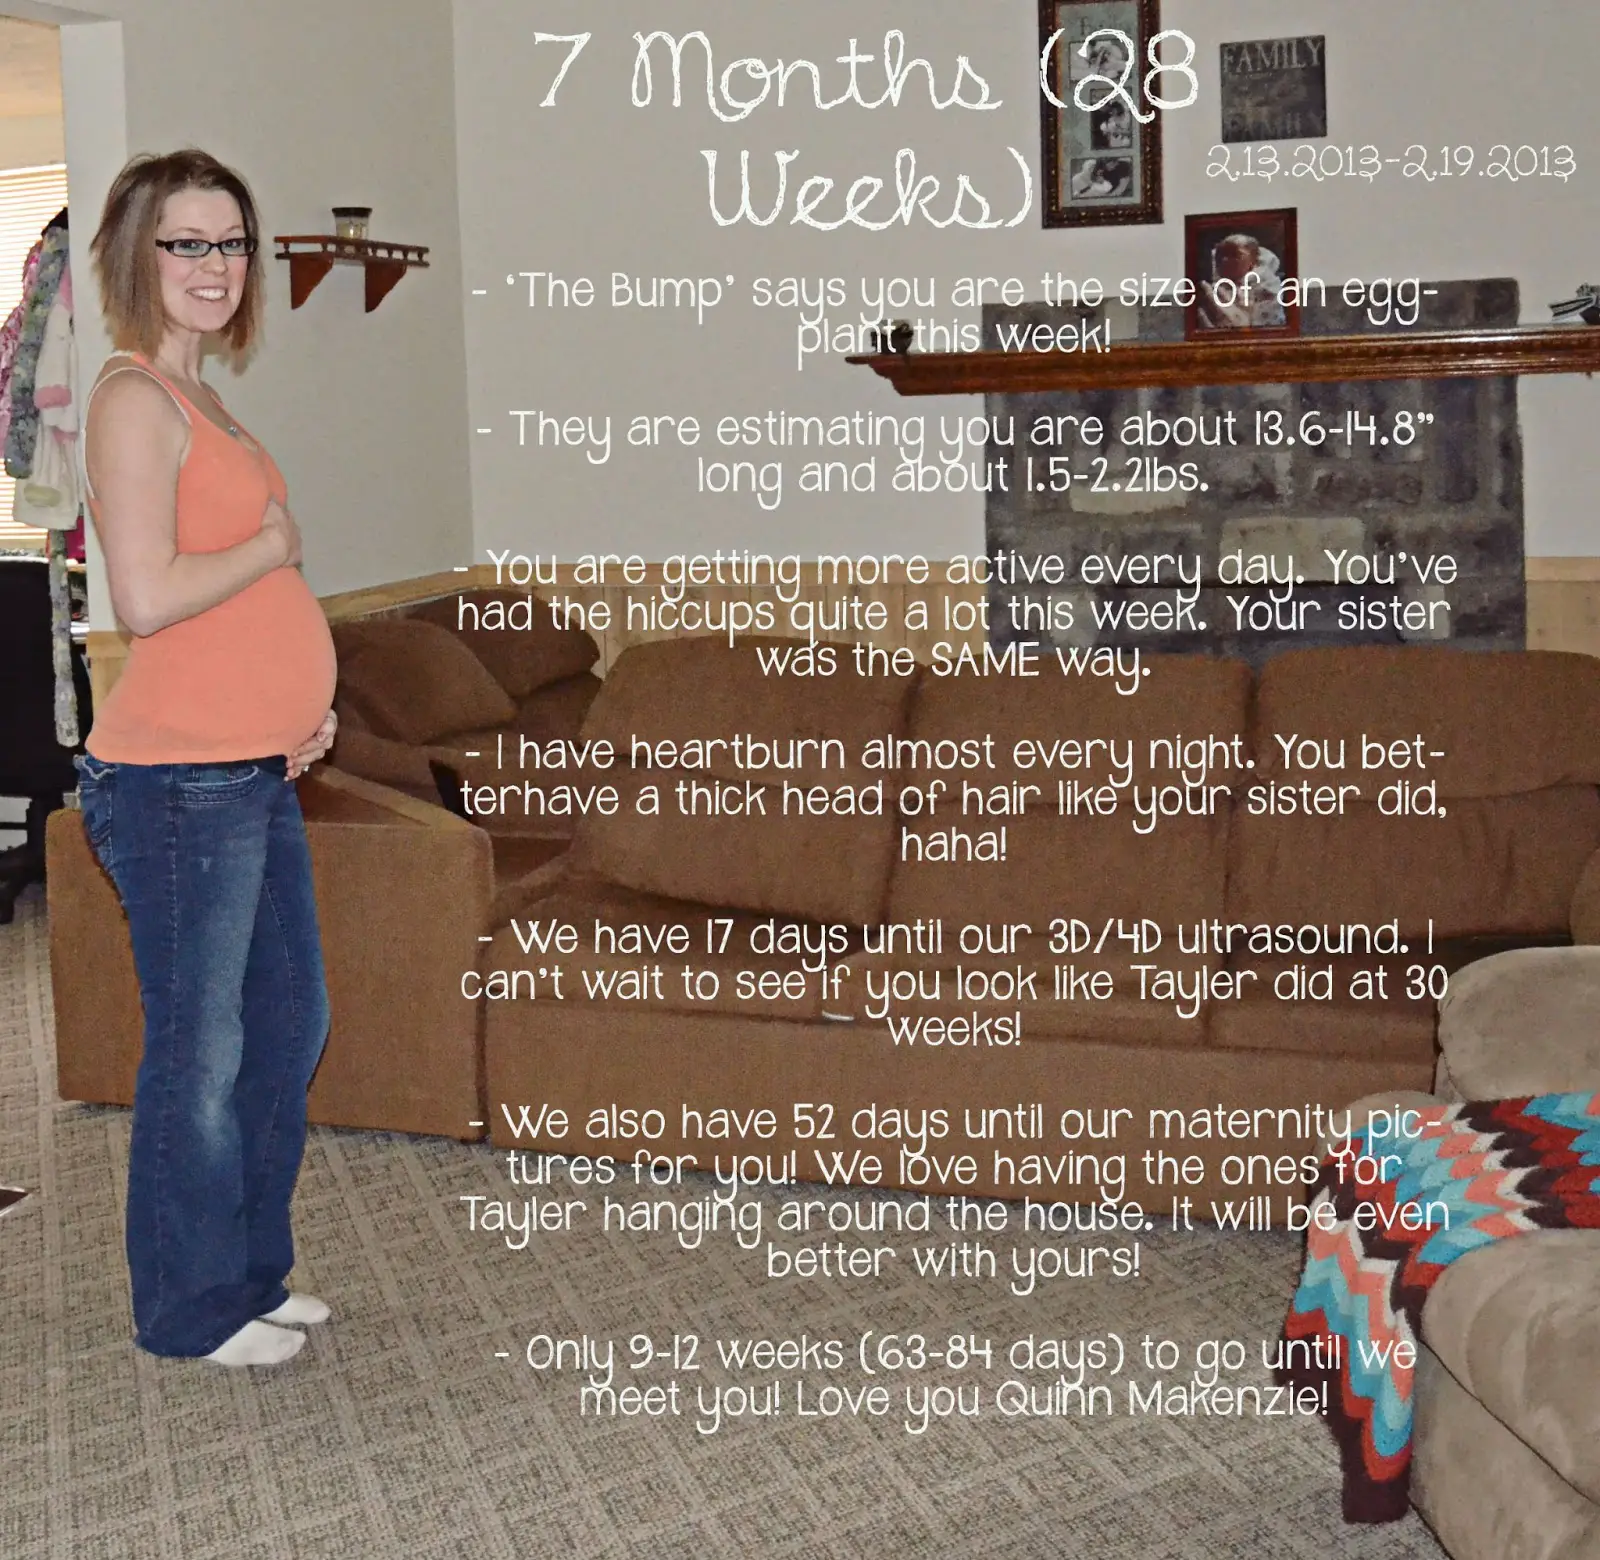 Bay Watch: 7 MONTHS PREGNANT [28 Weeks]